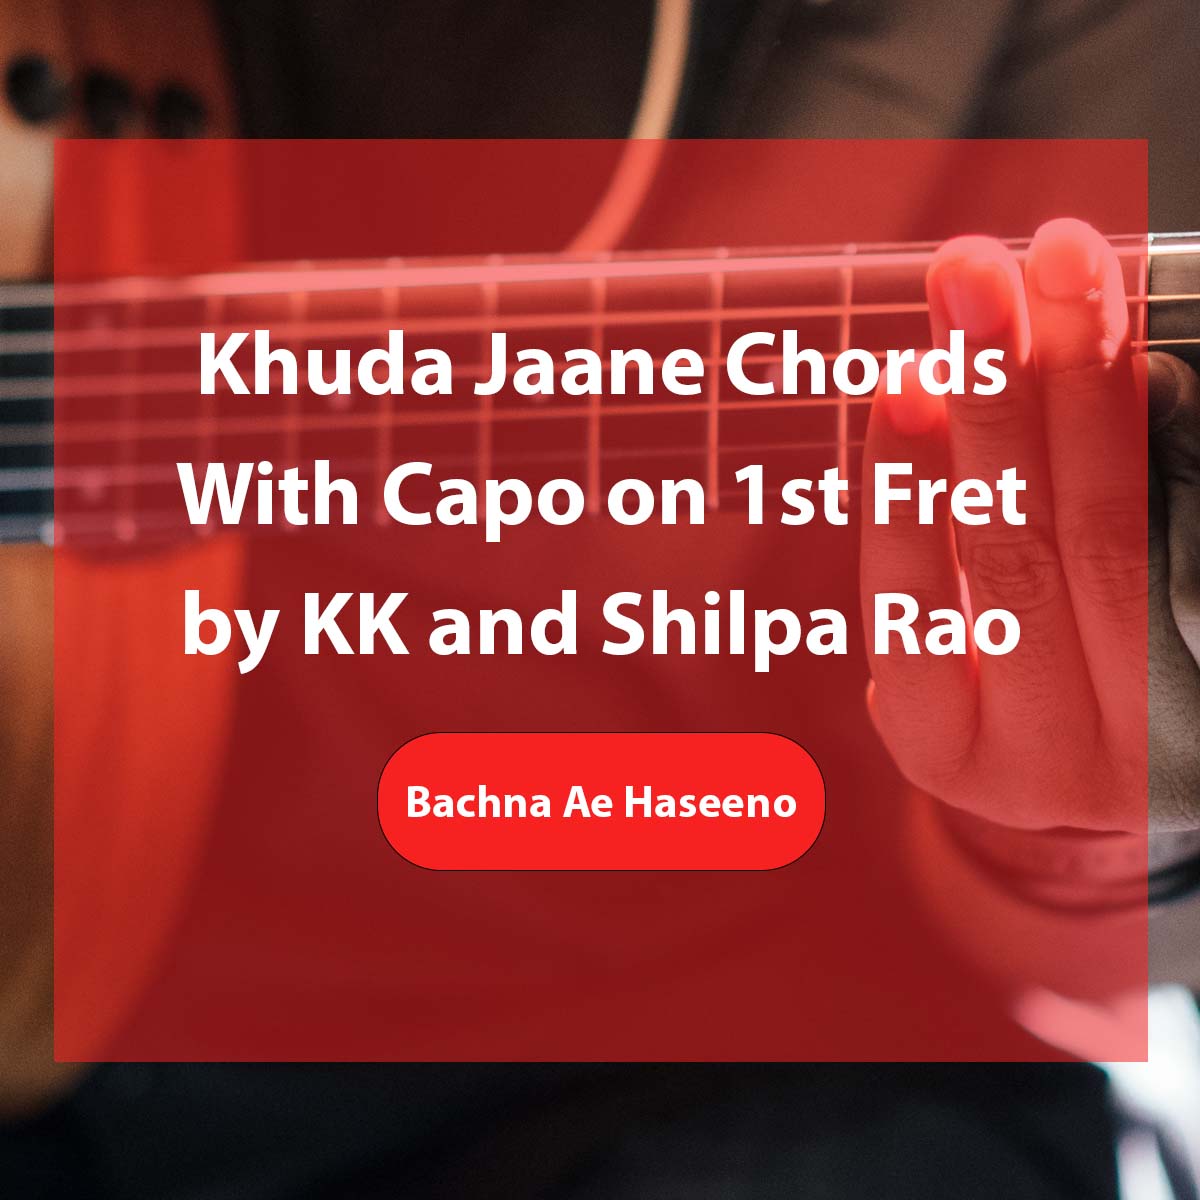 Khuda Jaane Chords with Capo on 1st Fret from Bachna Ae Haseeno by KK and Shilpa Rao